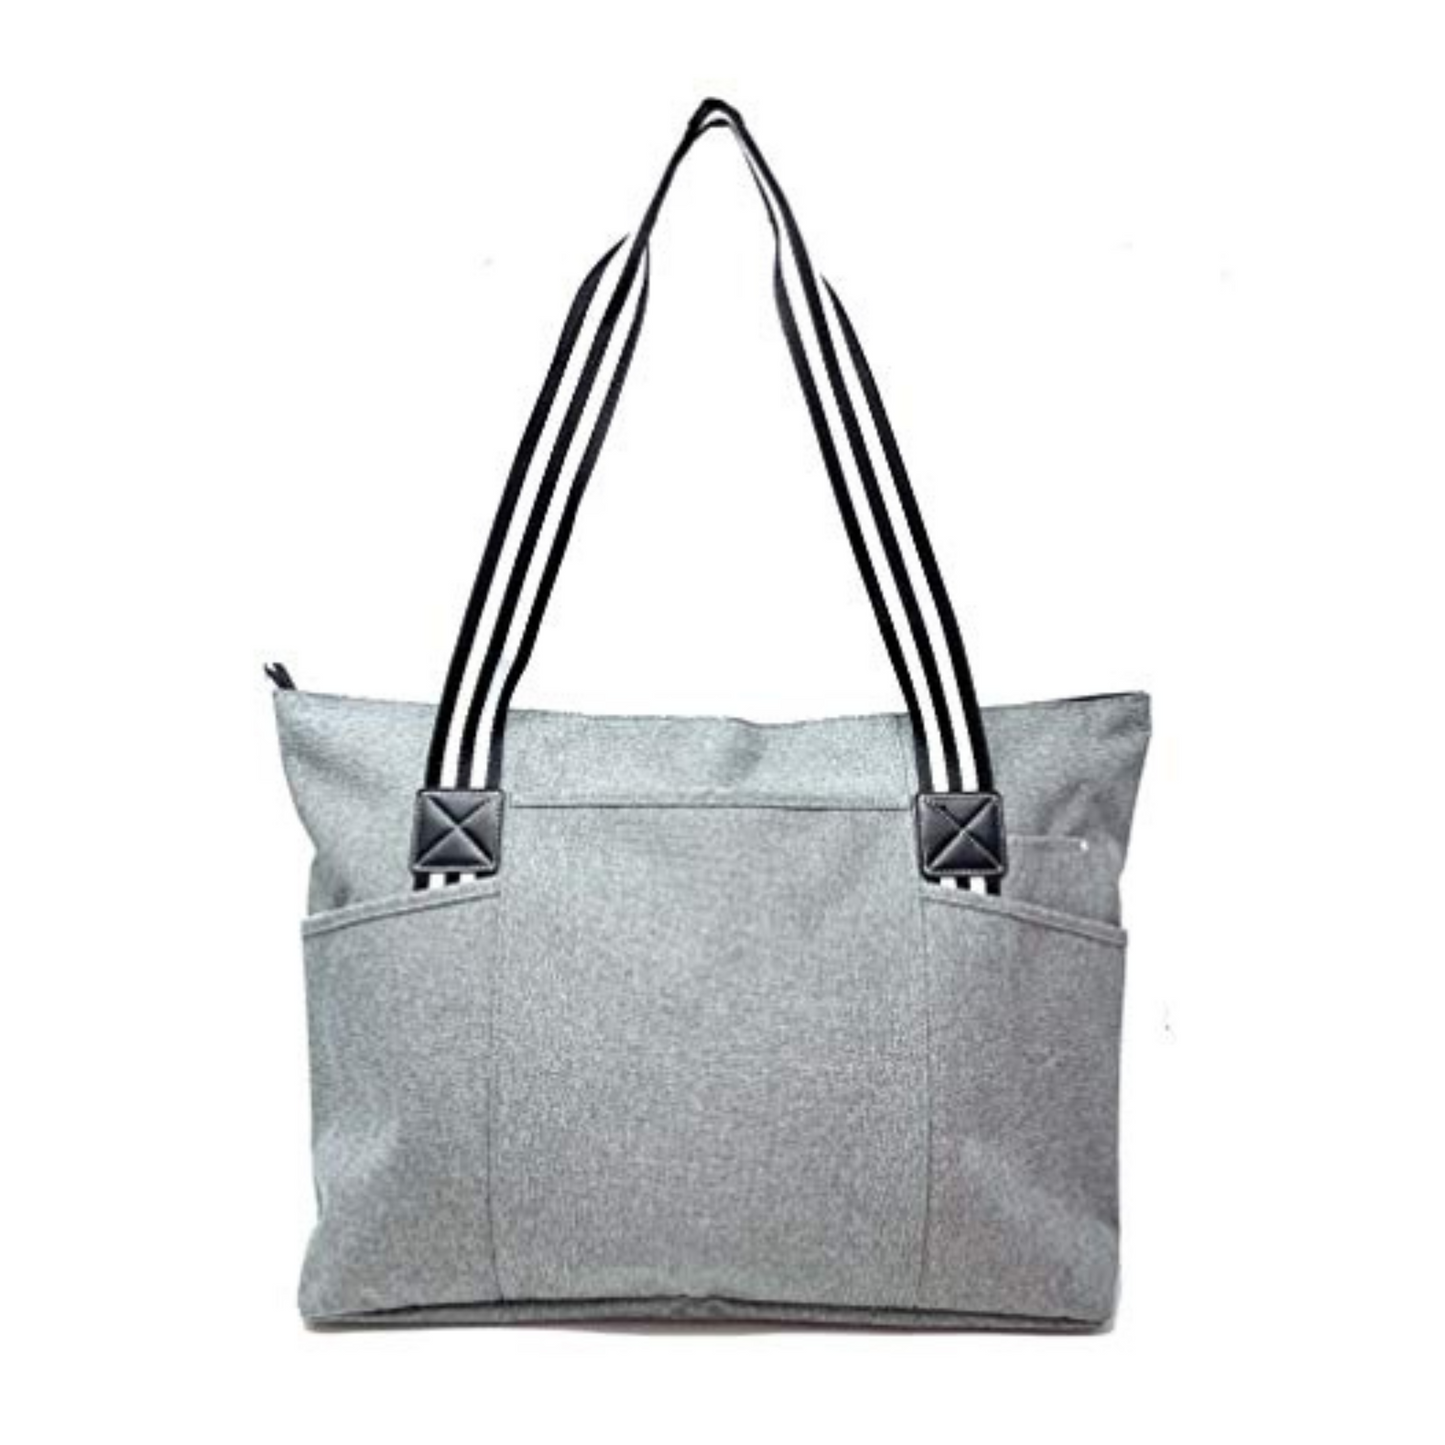 Plain Gray Tessa Tote Bag